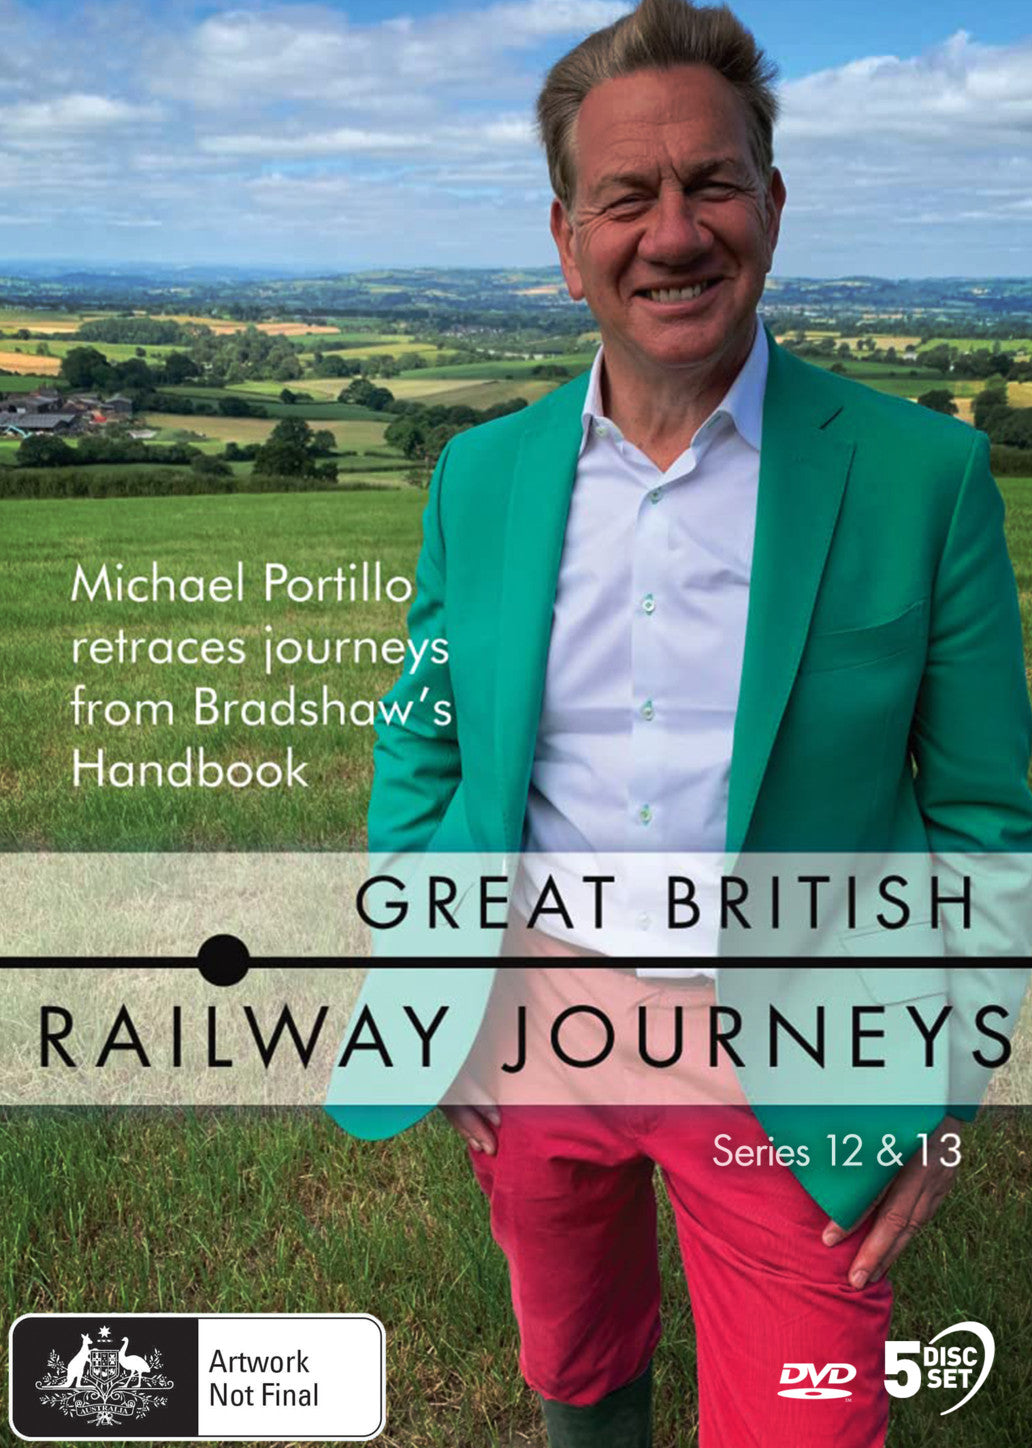 GREAT BRITISH RAILWAY JOURNEYS WITH MICHAEL PORTILLO: SERIES 12 & 13